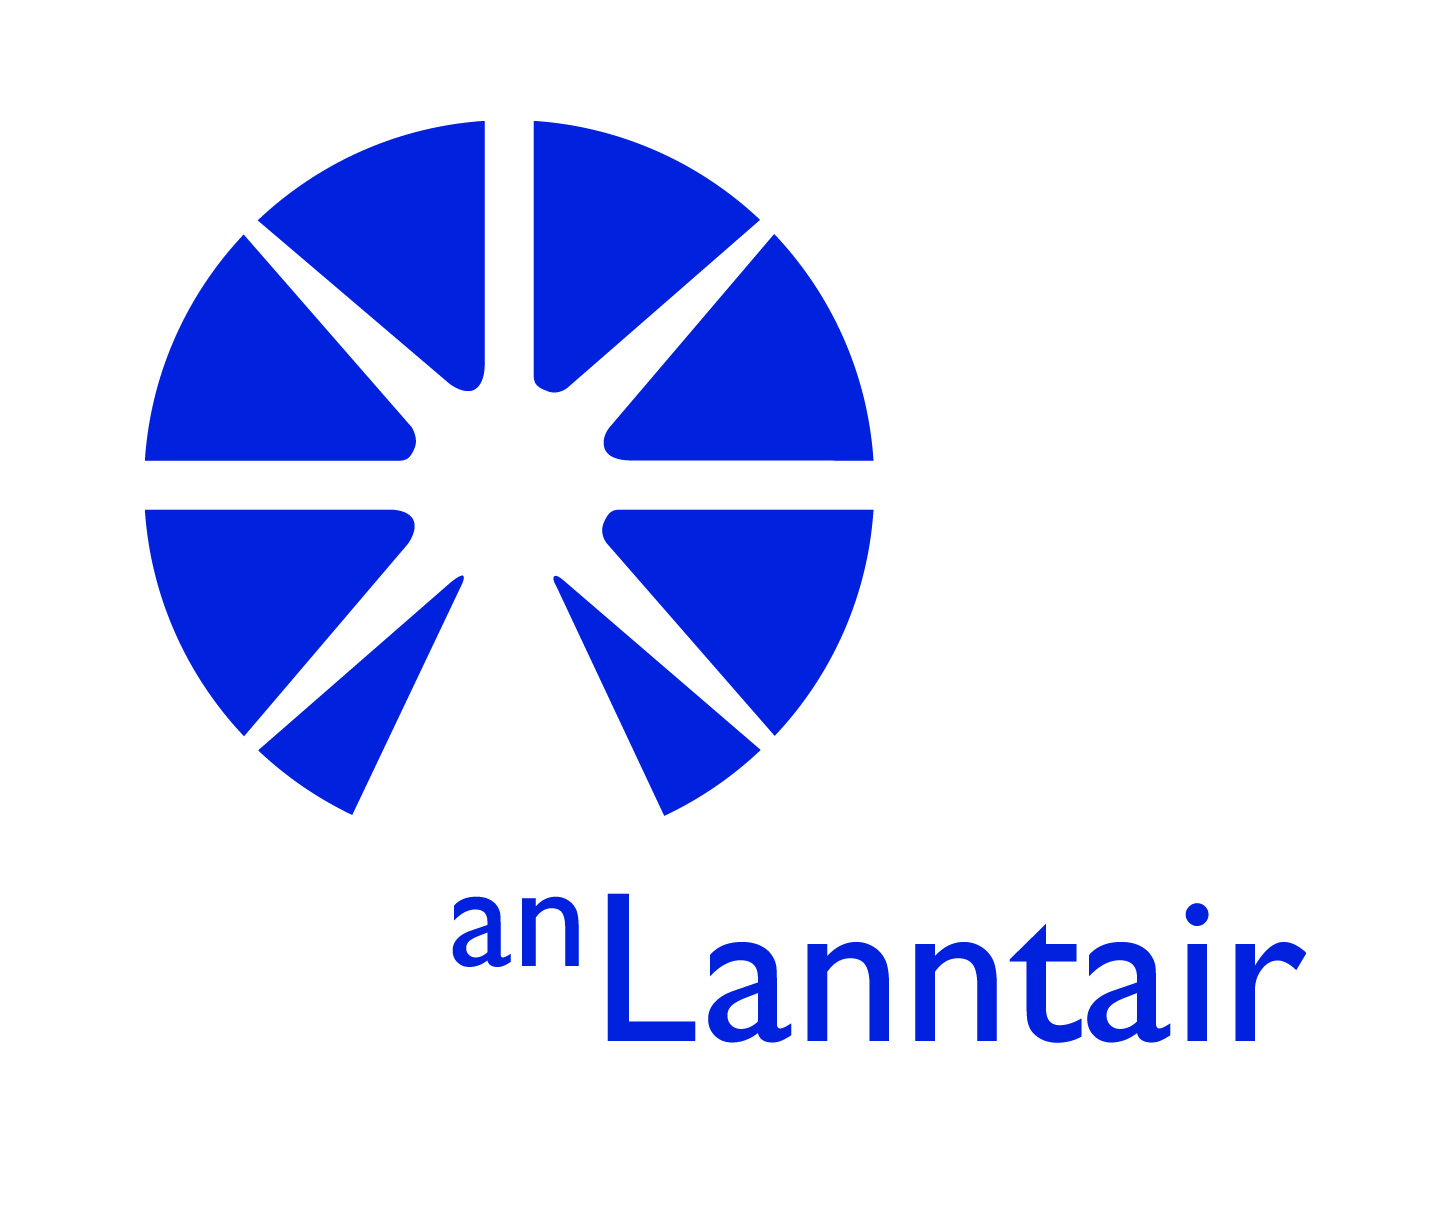 An Lanntair